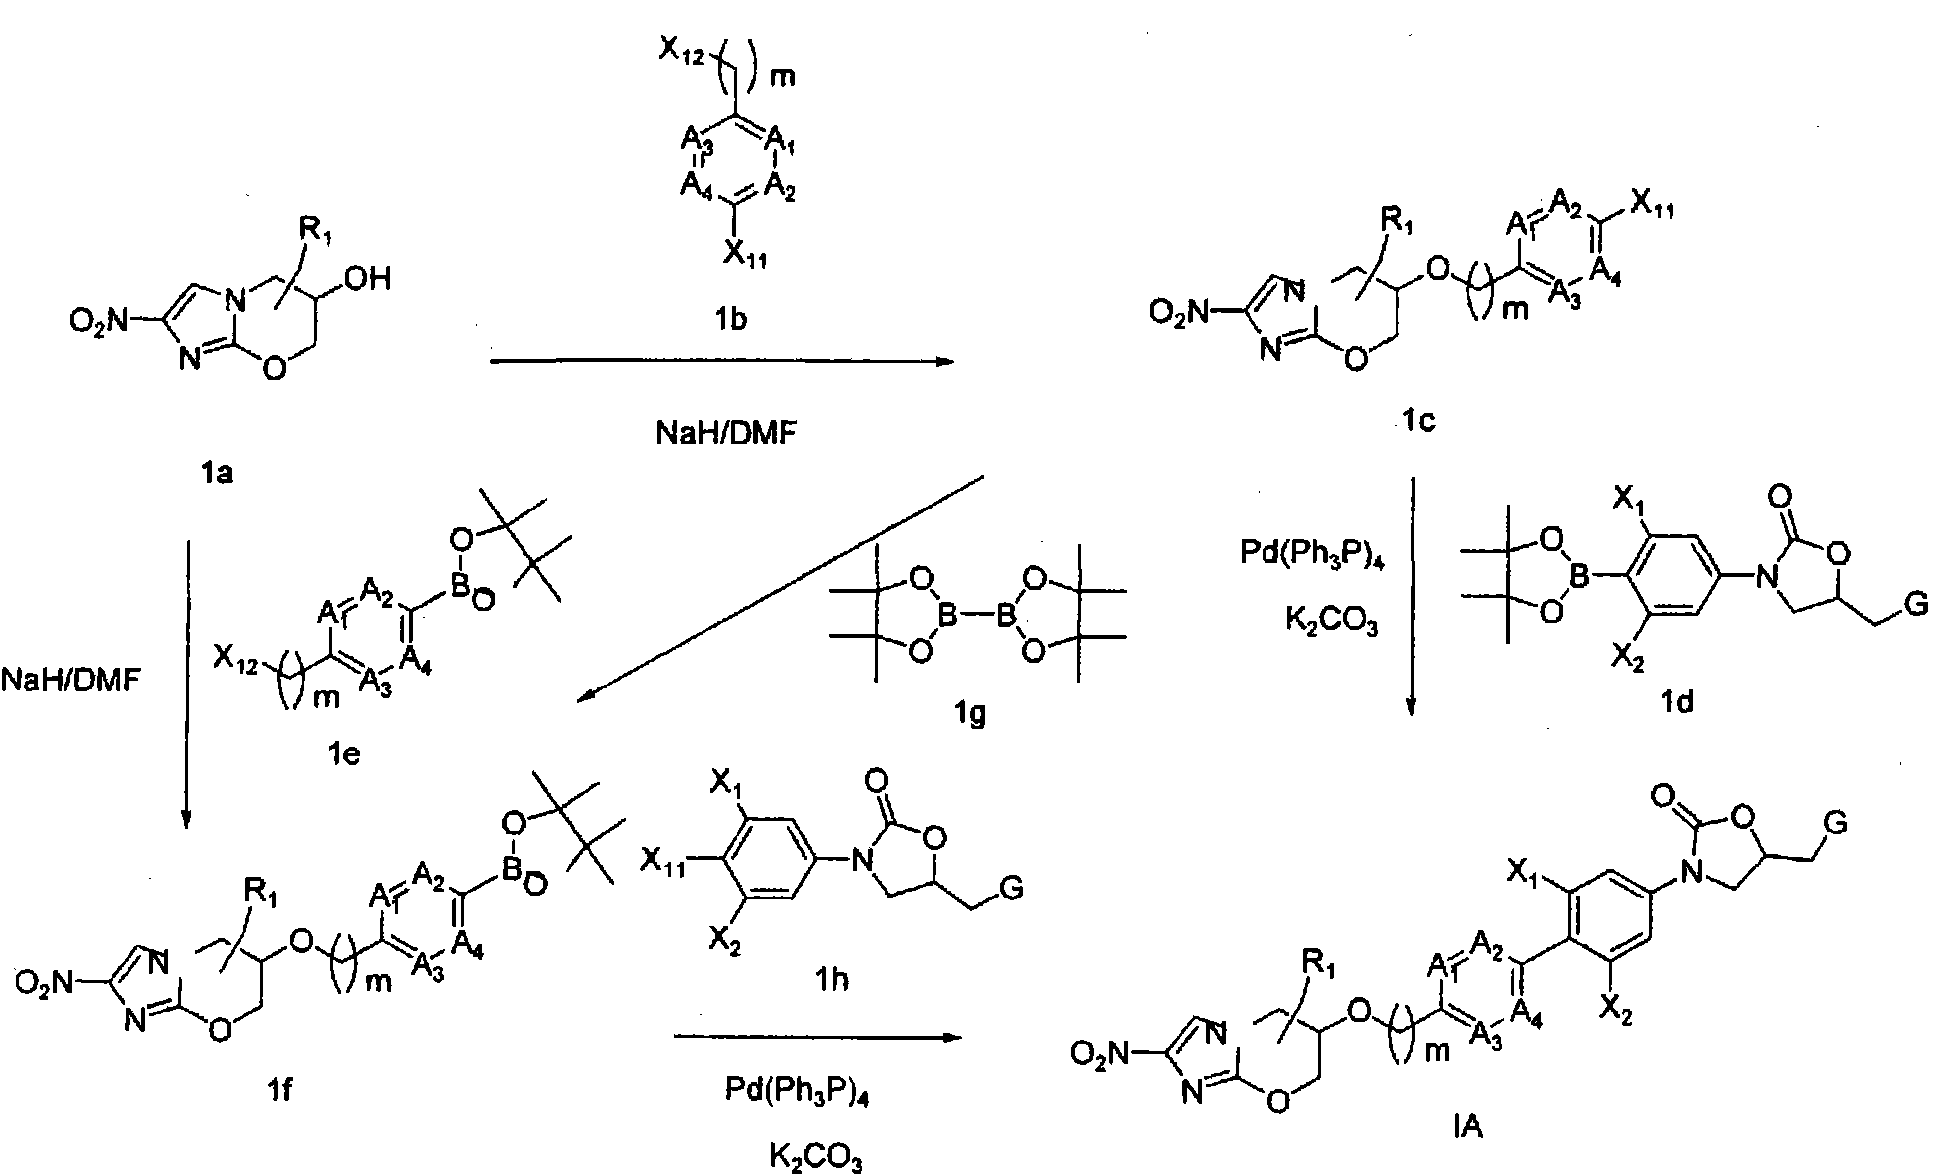 Bicyclic nitroimidazoles covalently linked to substituted phenyl oxazolidinones